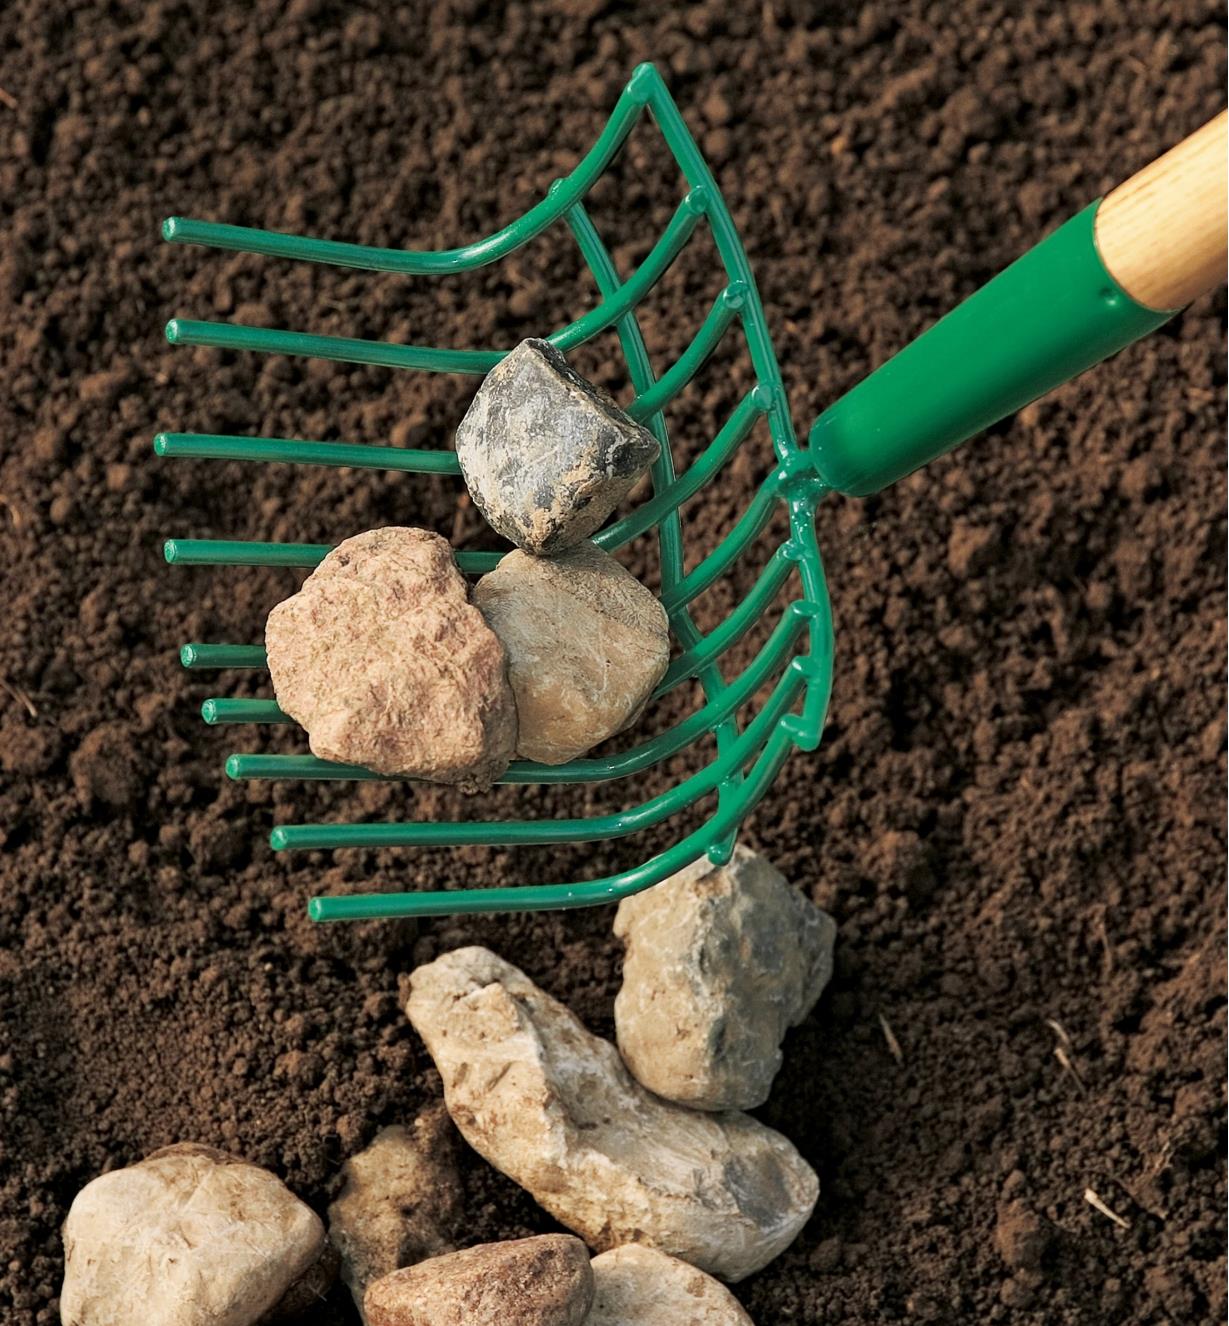 Scooping rocks from soil into the rock rake's basket-like head